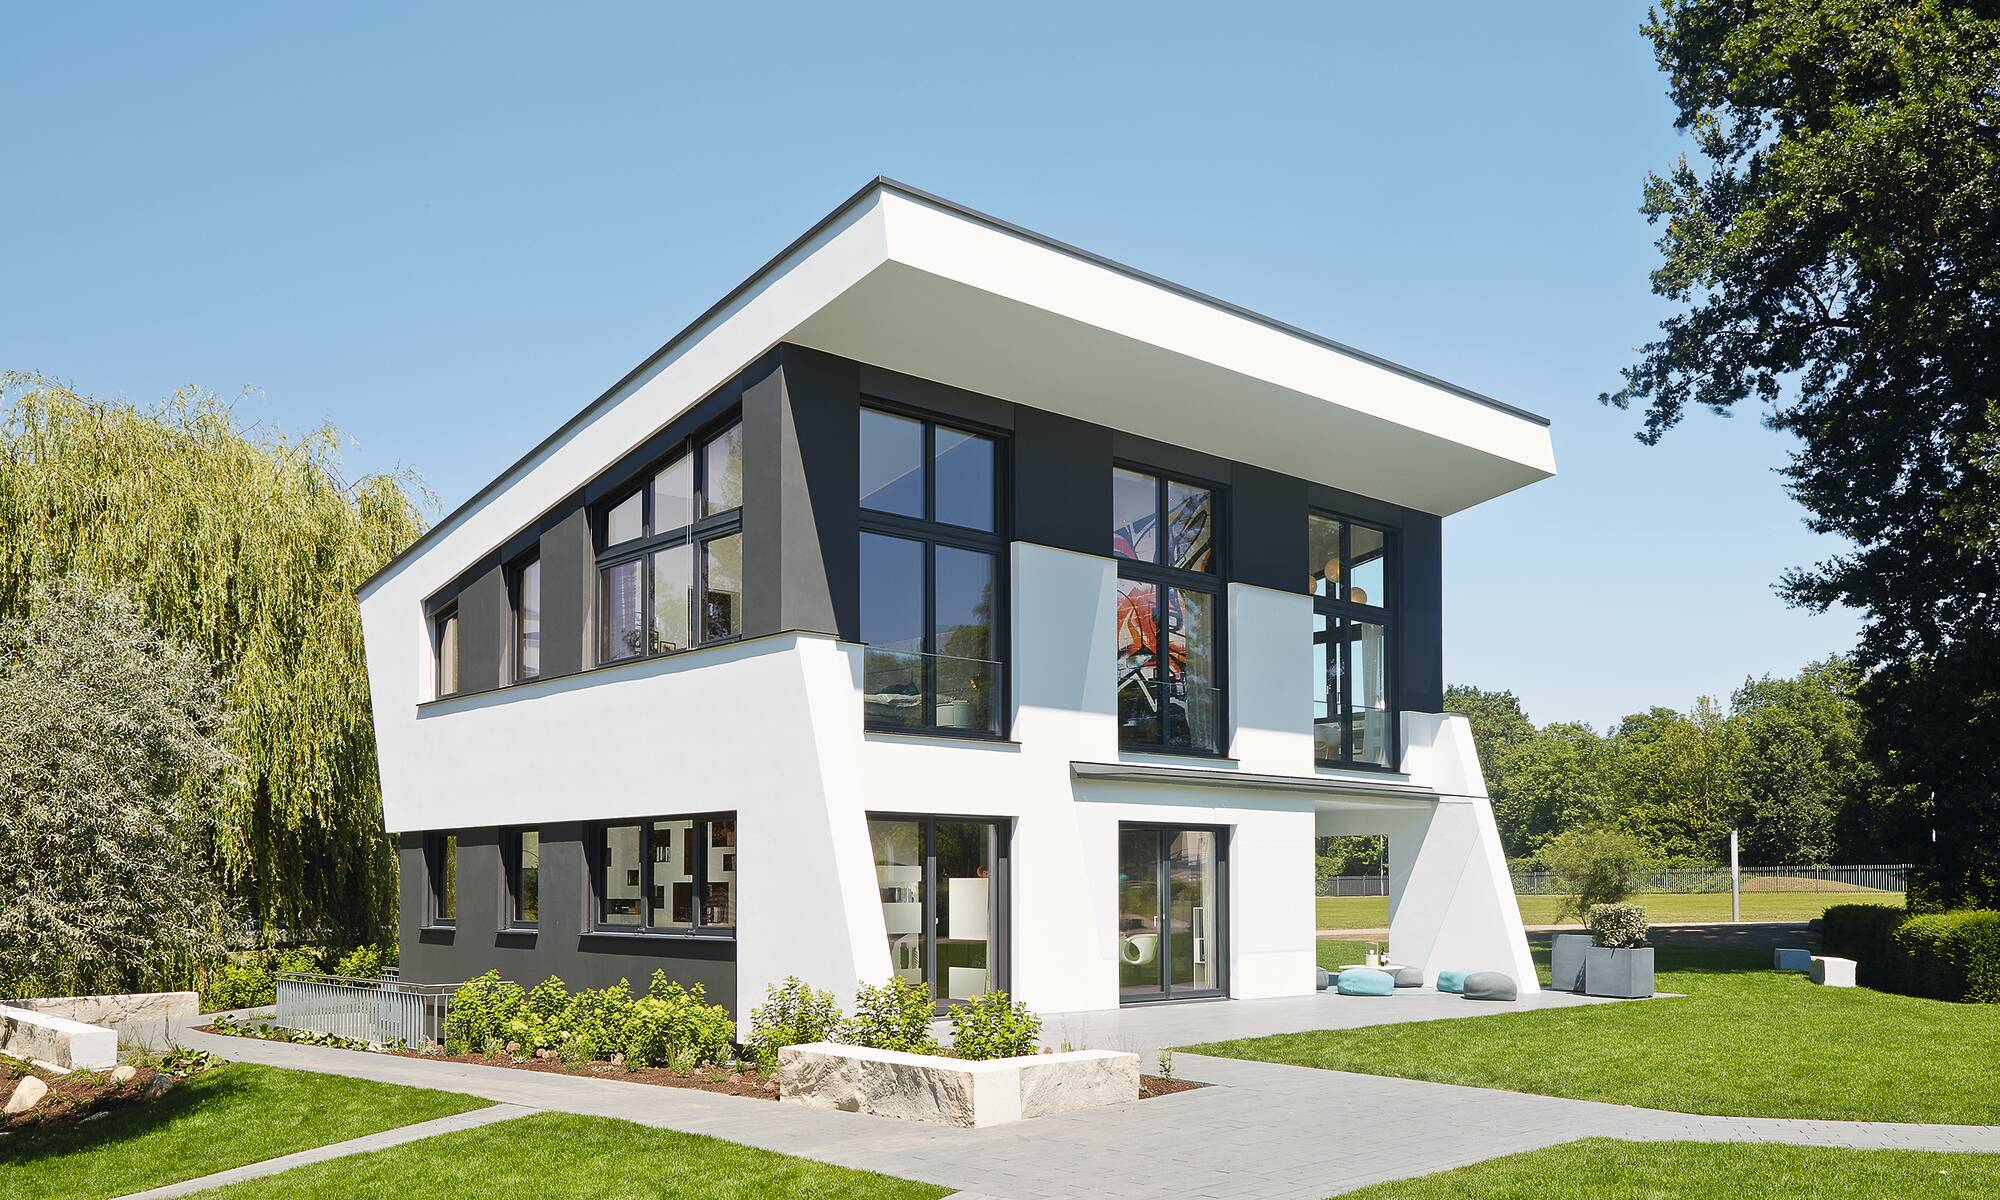 Contemporary urban loft style self-build home